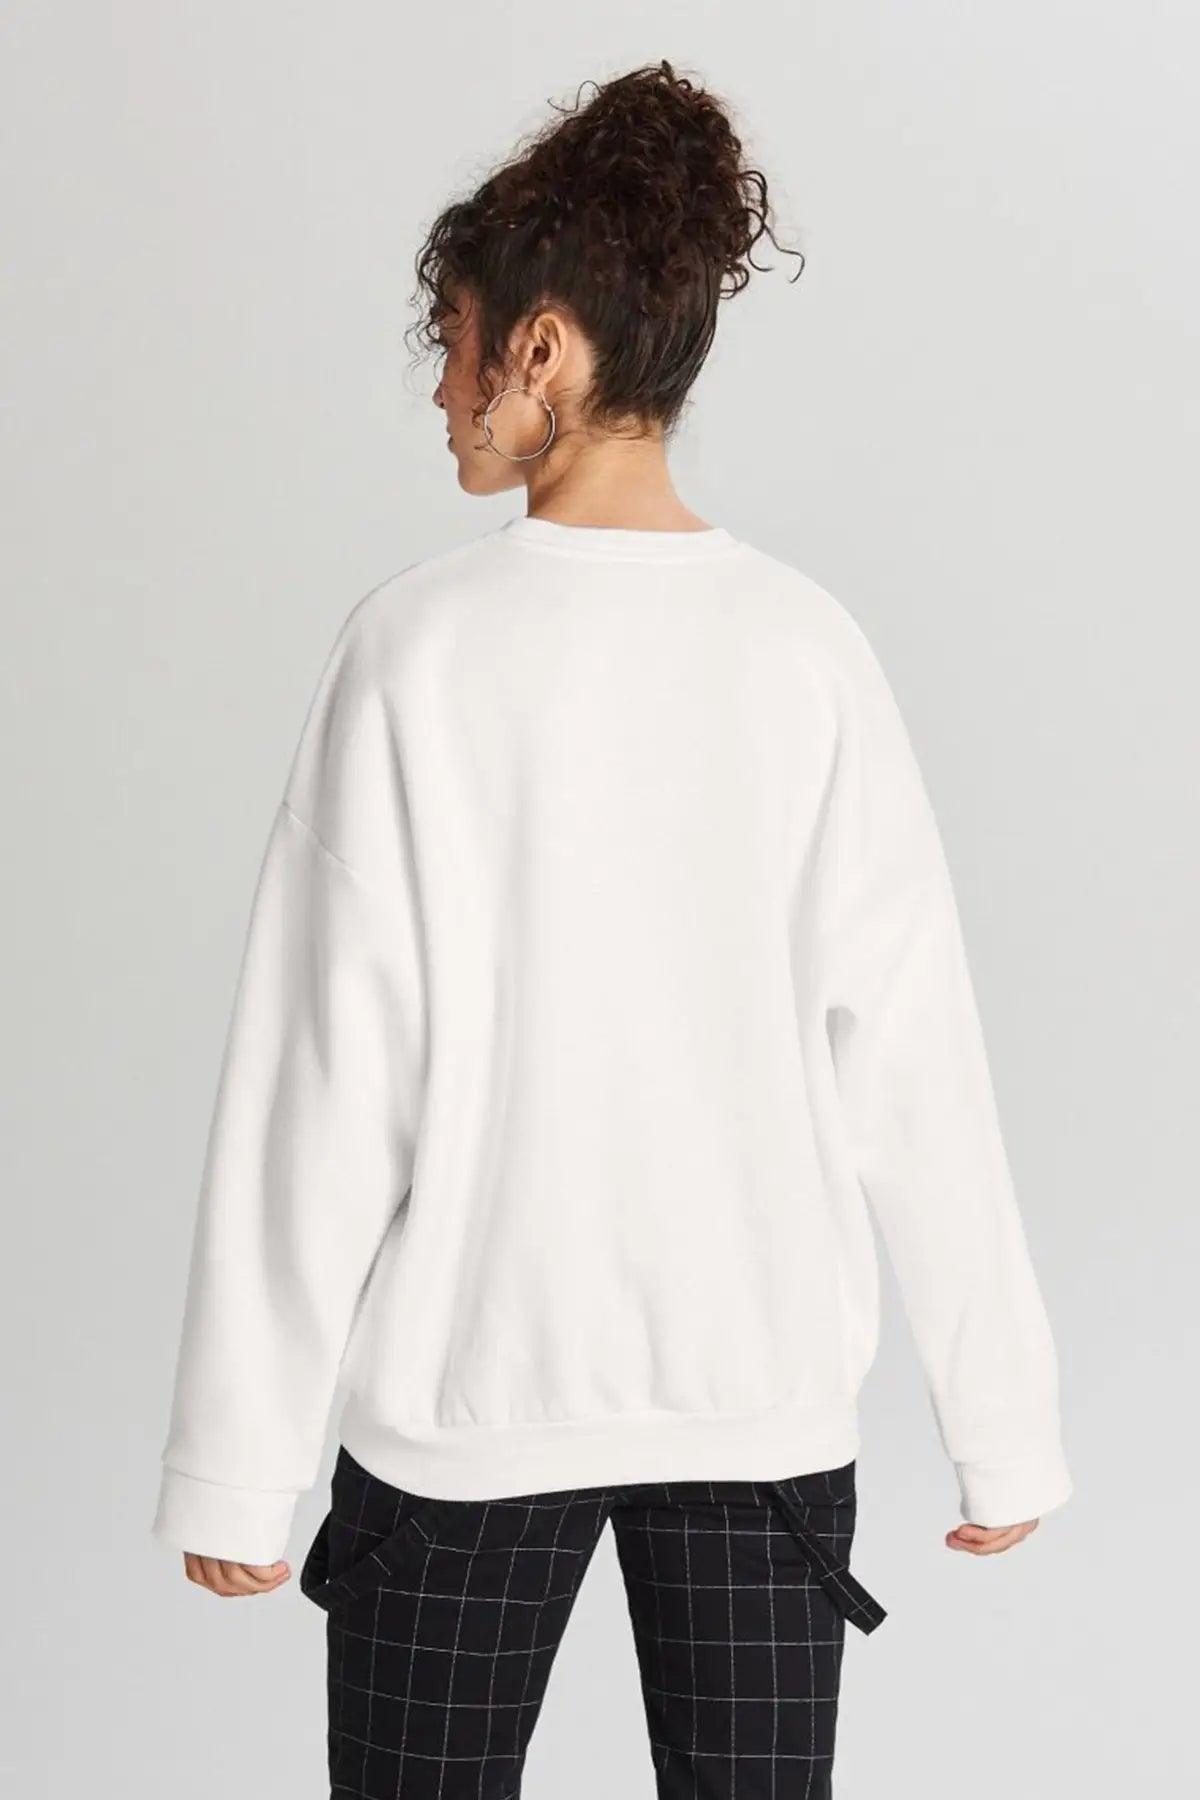 Enjoy Yourself Oversize Kadın Sweatshirt - PΛSΛGE